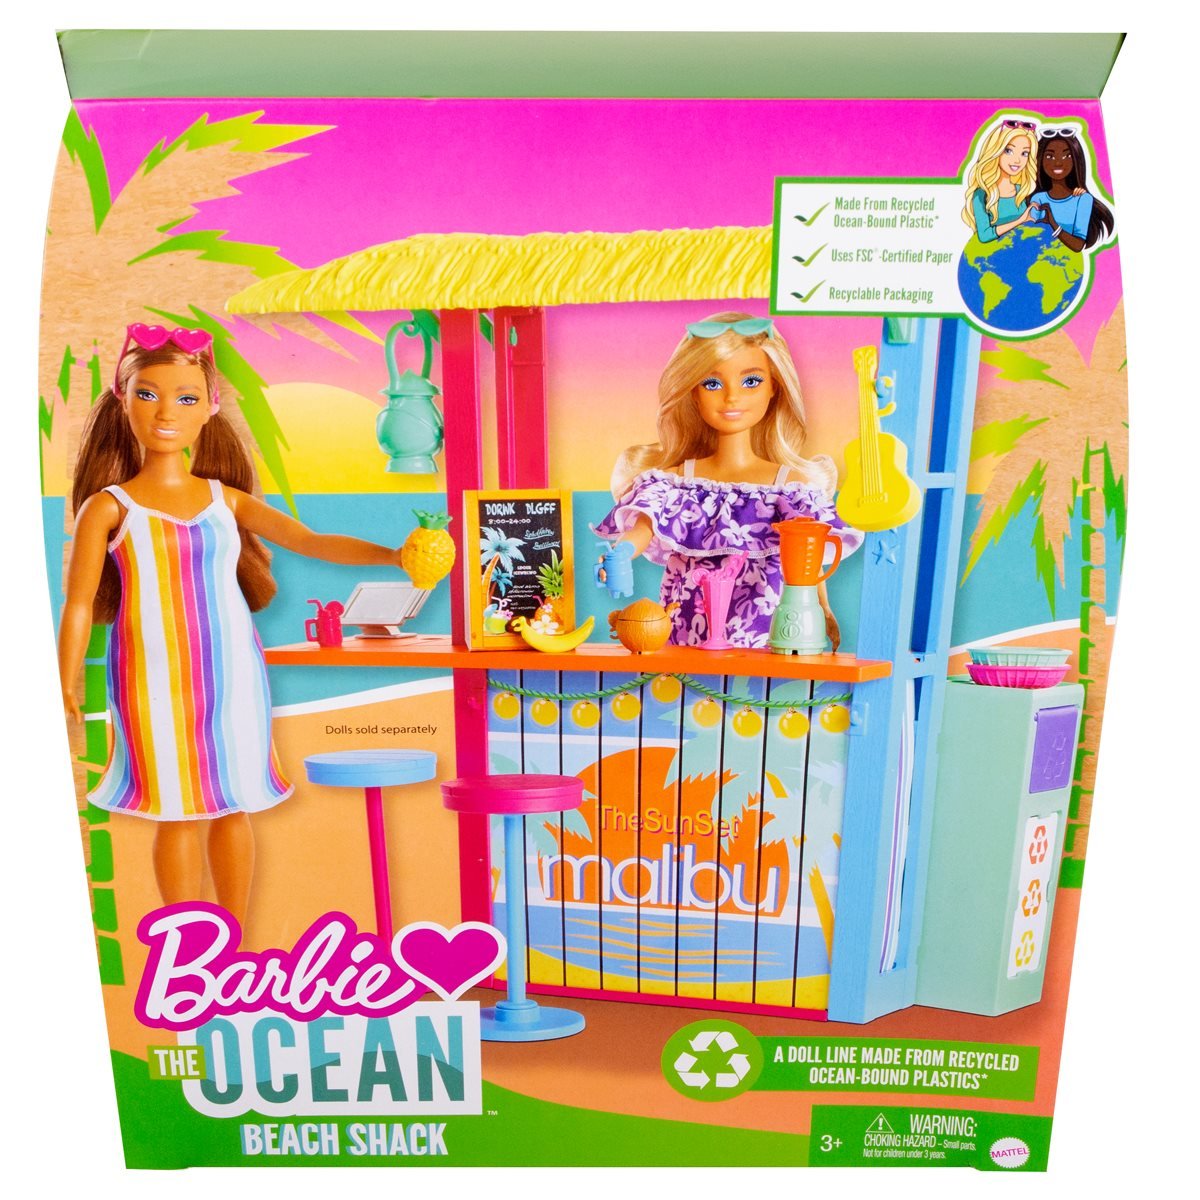 Barbie Loves the Ocean Beach Shack Playset